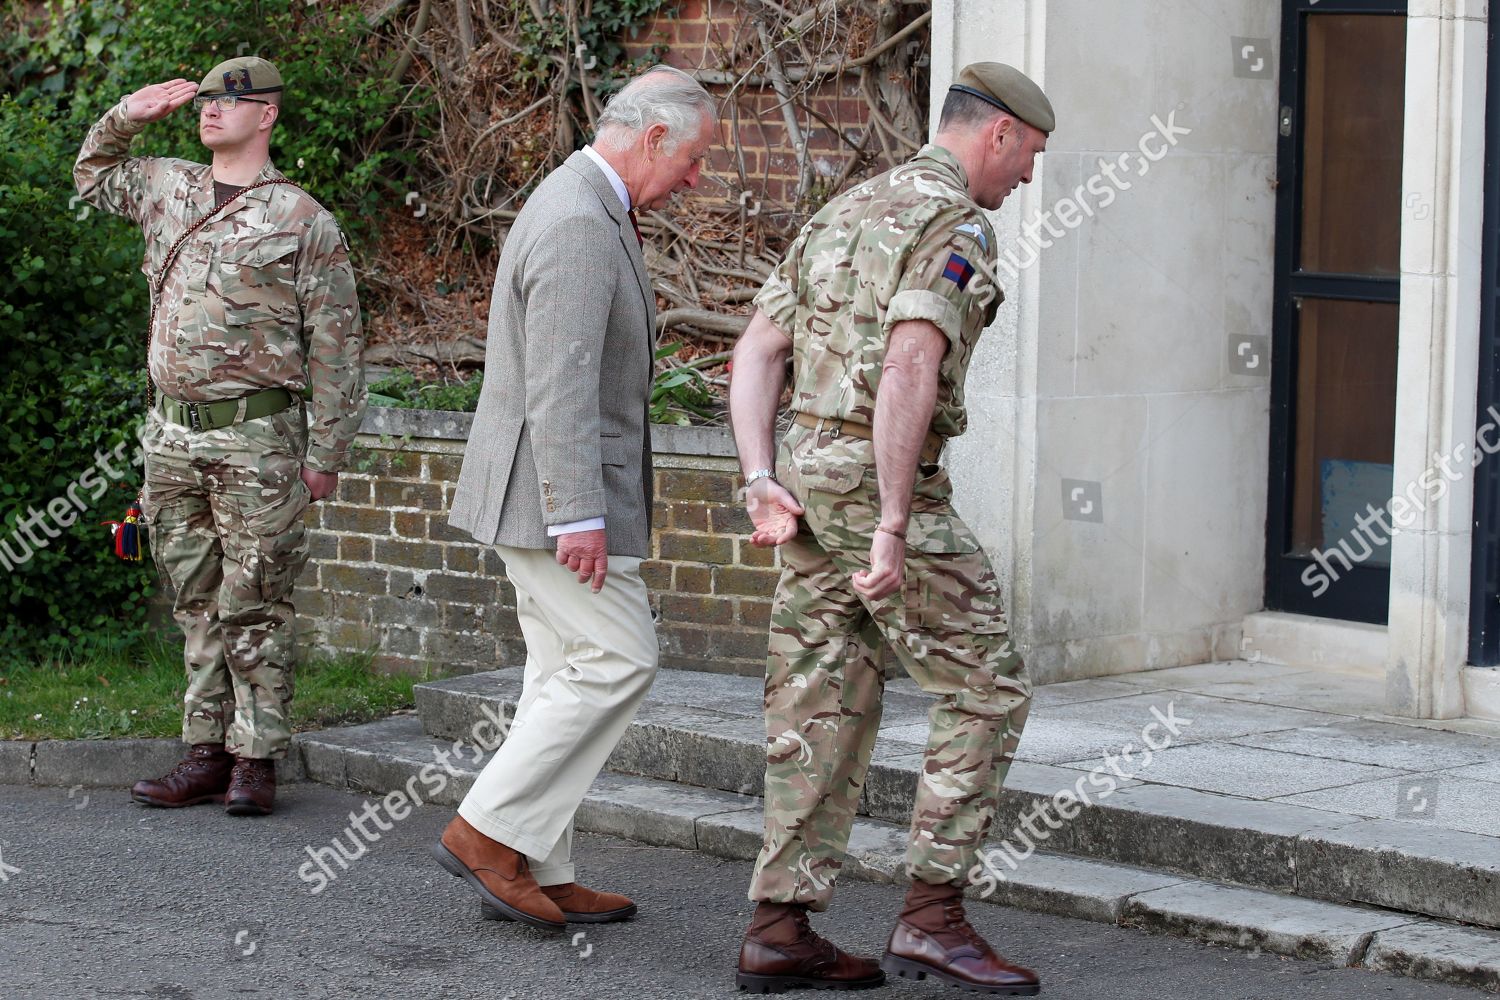 prince-charles-visits-members-of-the-welsh-guards-windsor-uk-shutterstock-editorial-11889775l.jpg